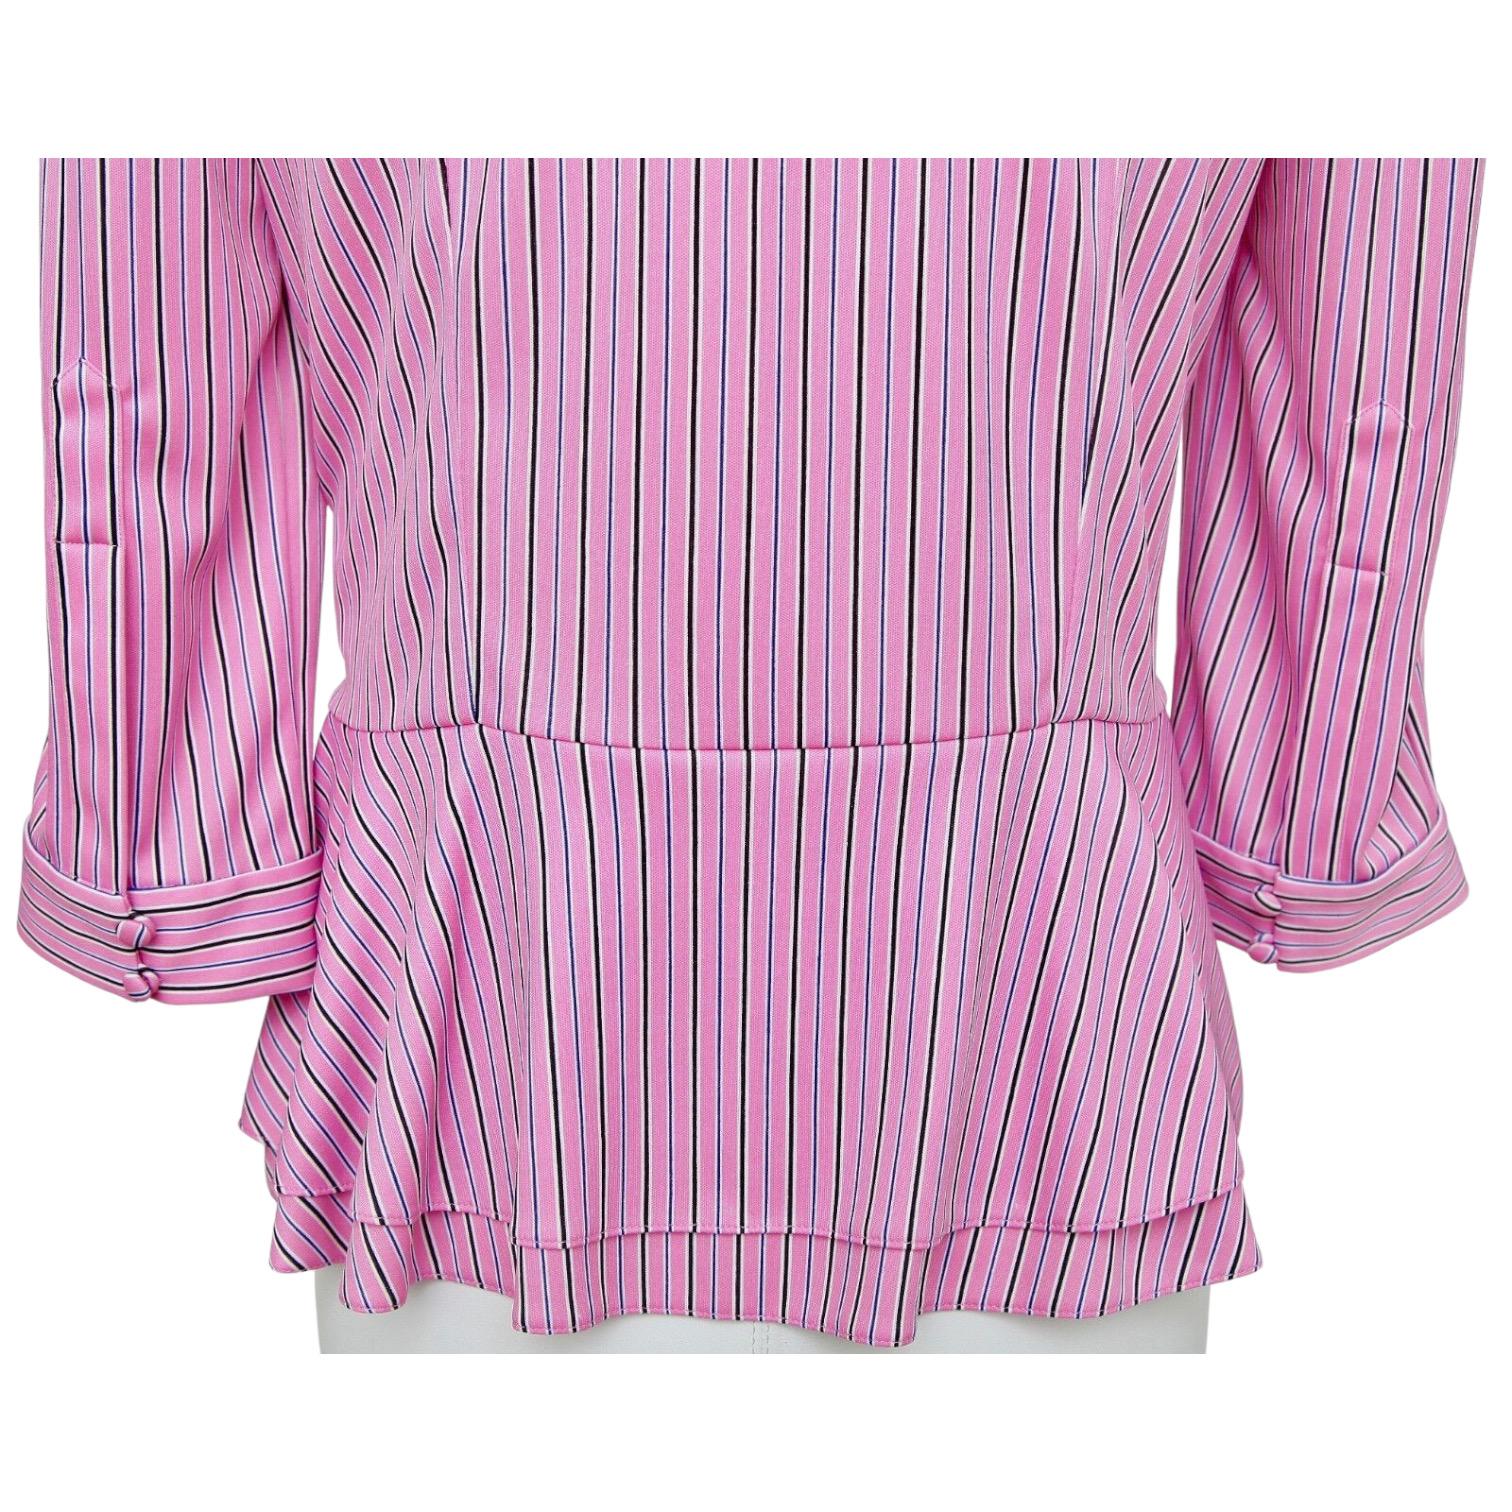 BALENCIAGA Striped Top Shirt Blouse 3/4 Sleeve Neck Tie Rose White Black 38 NWT For Sale 4